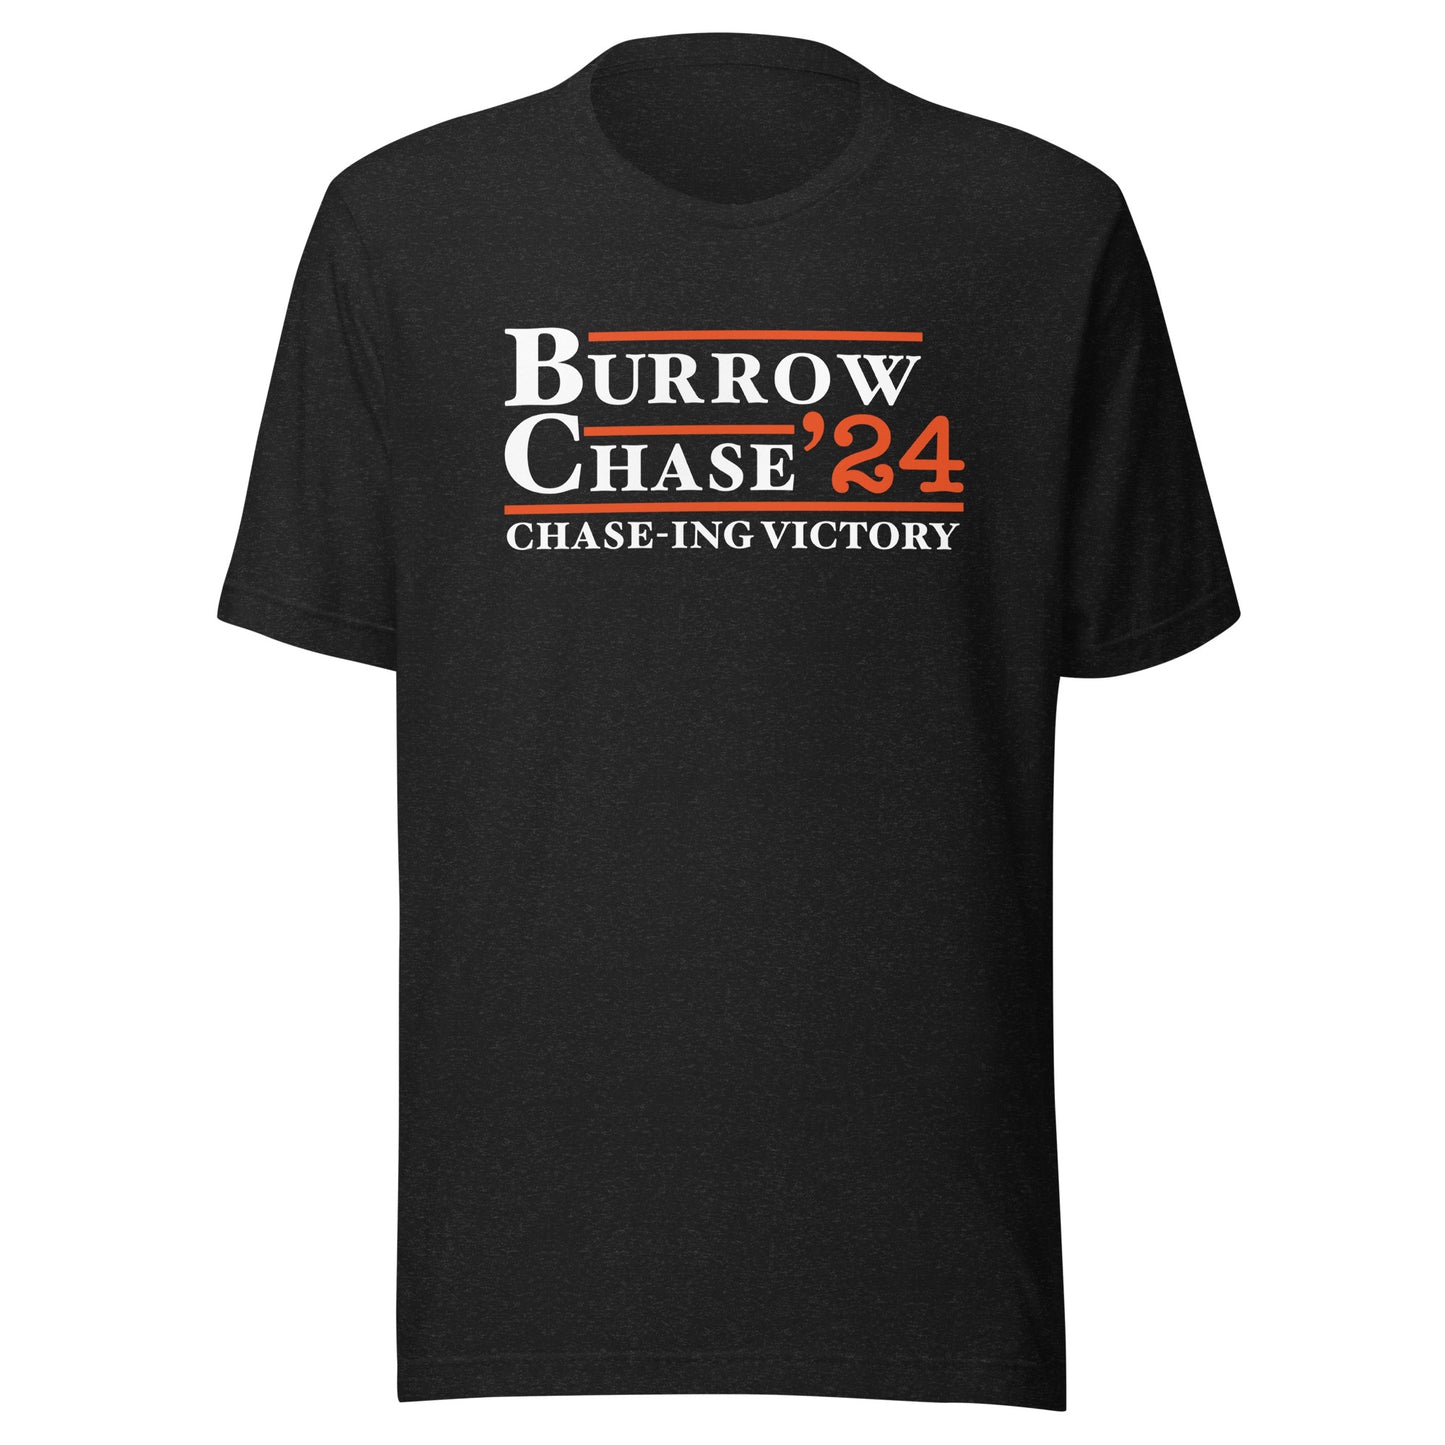 BURROW CHASE '24 - CHASE-ING VICTORY - Unisex t-shirt